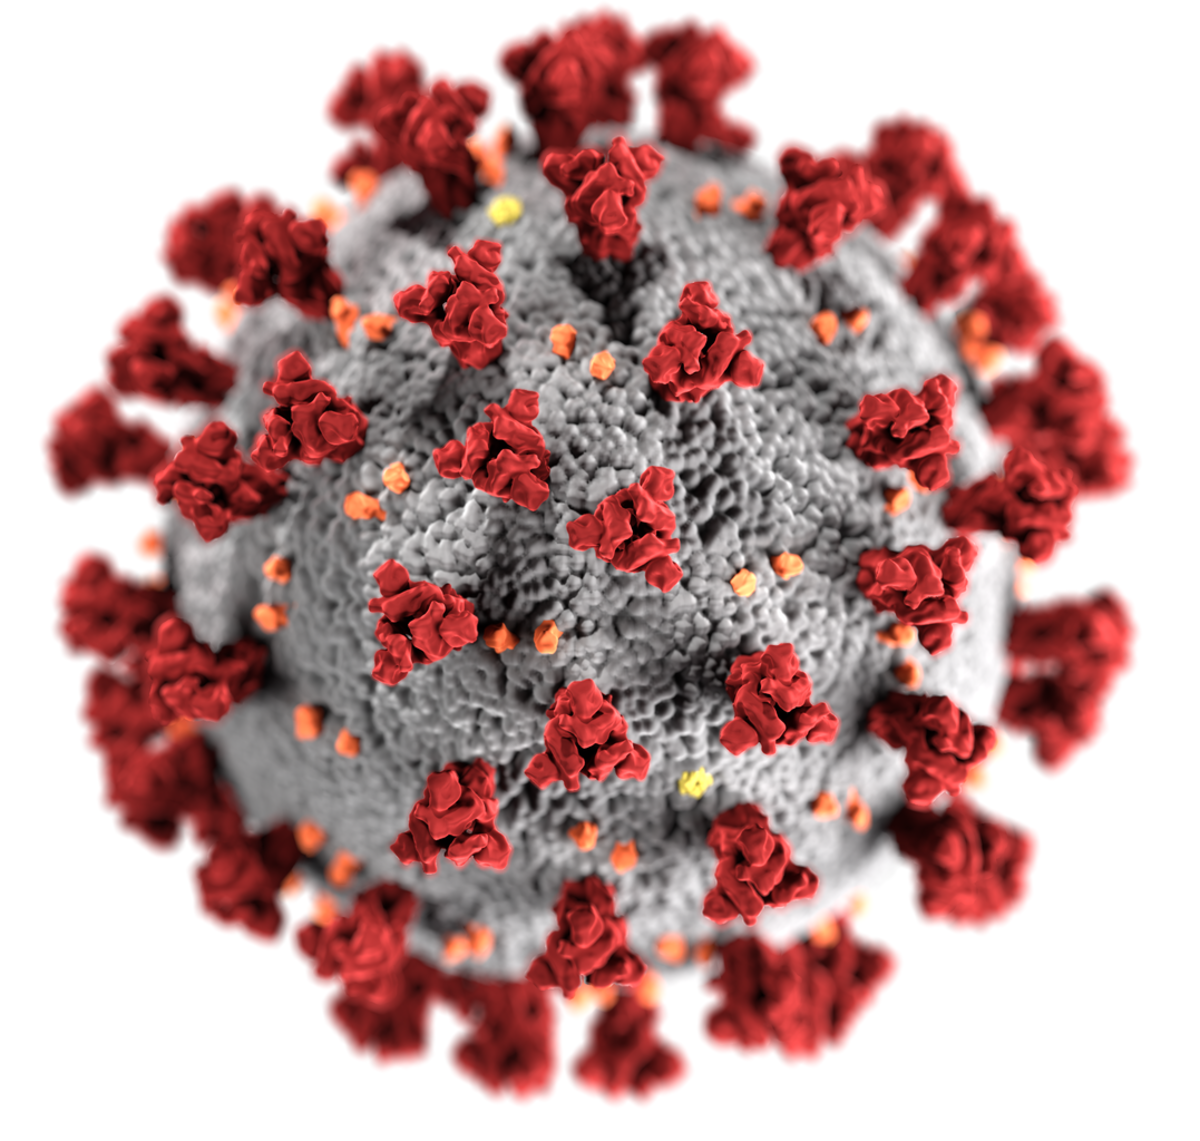 Illustration of a typical coronavirus